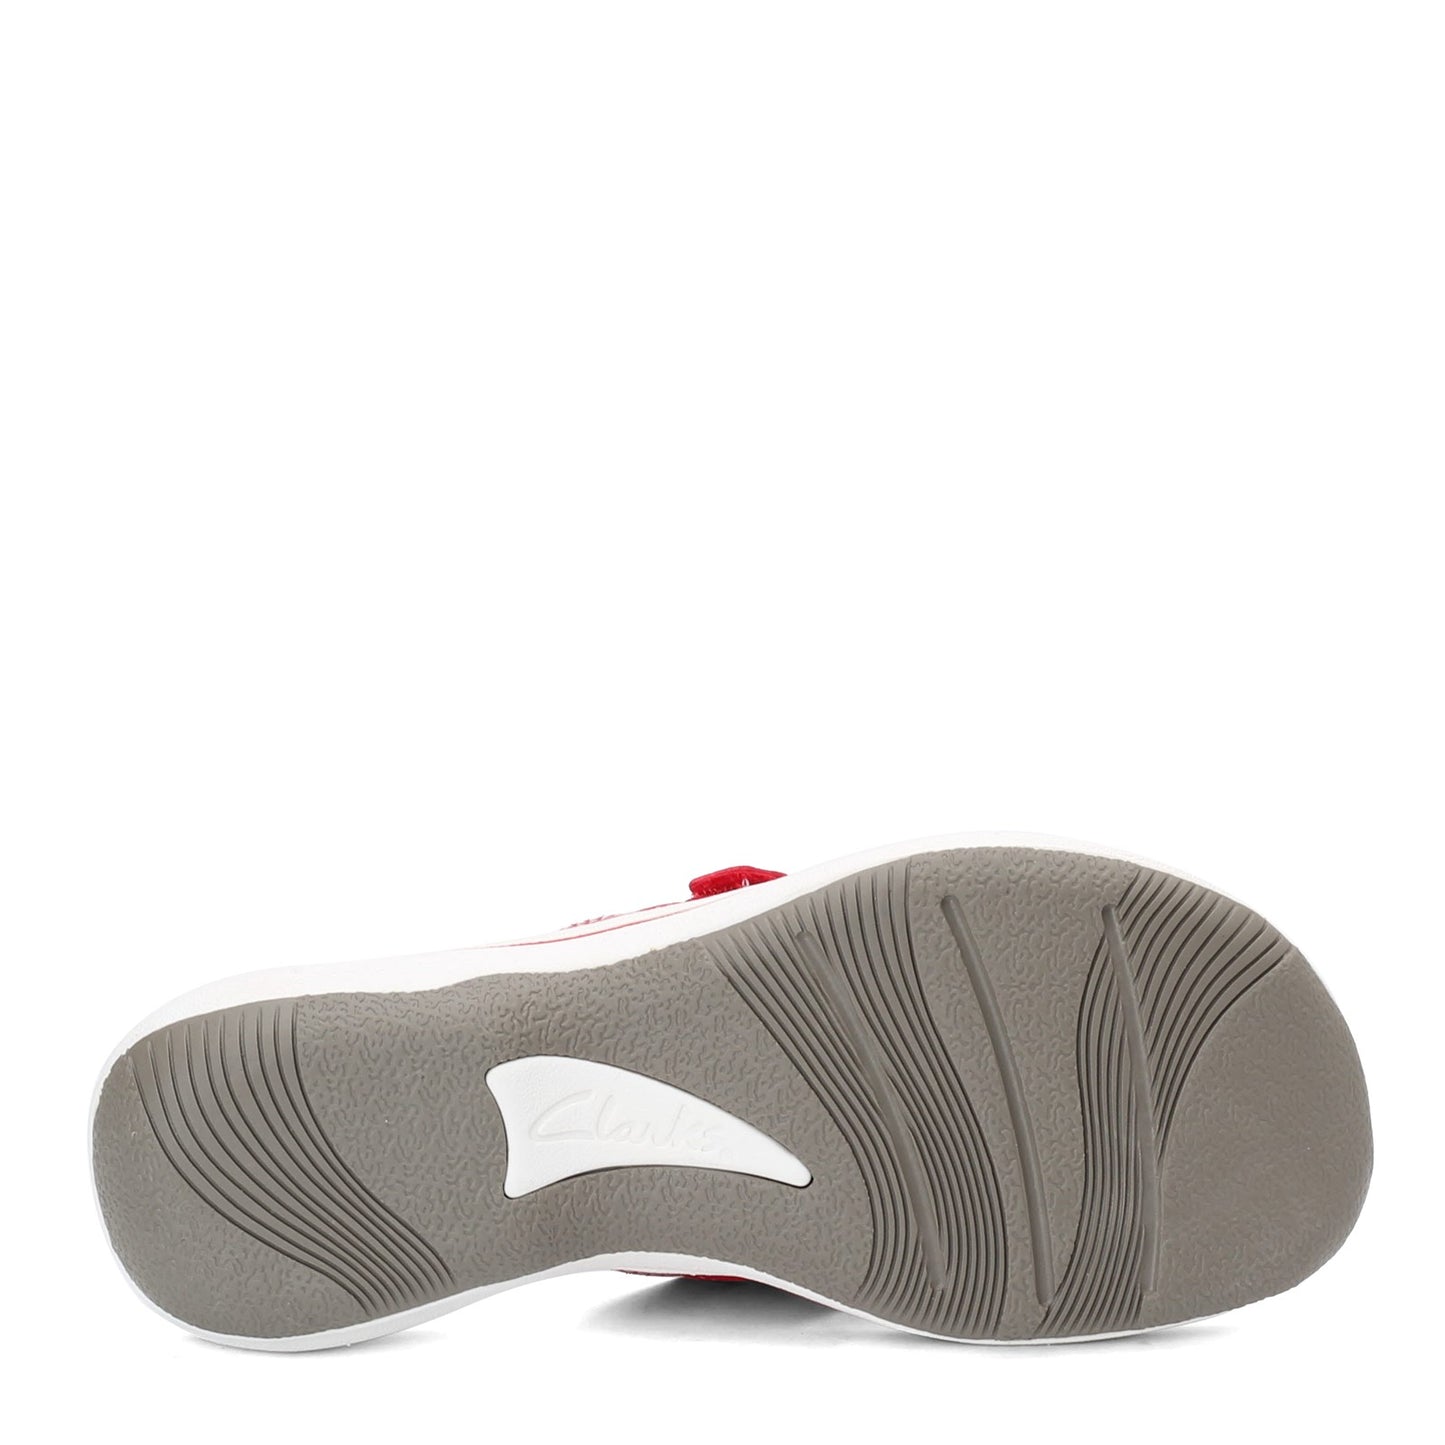 Peltz Shoes  Women's Clarks Breeze Sea Sandal RED 26125718